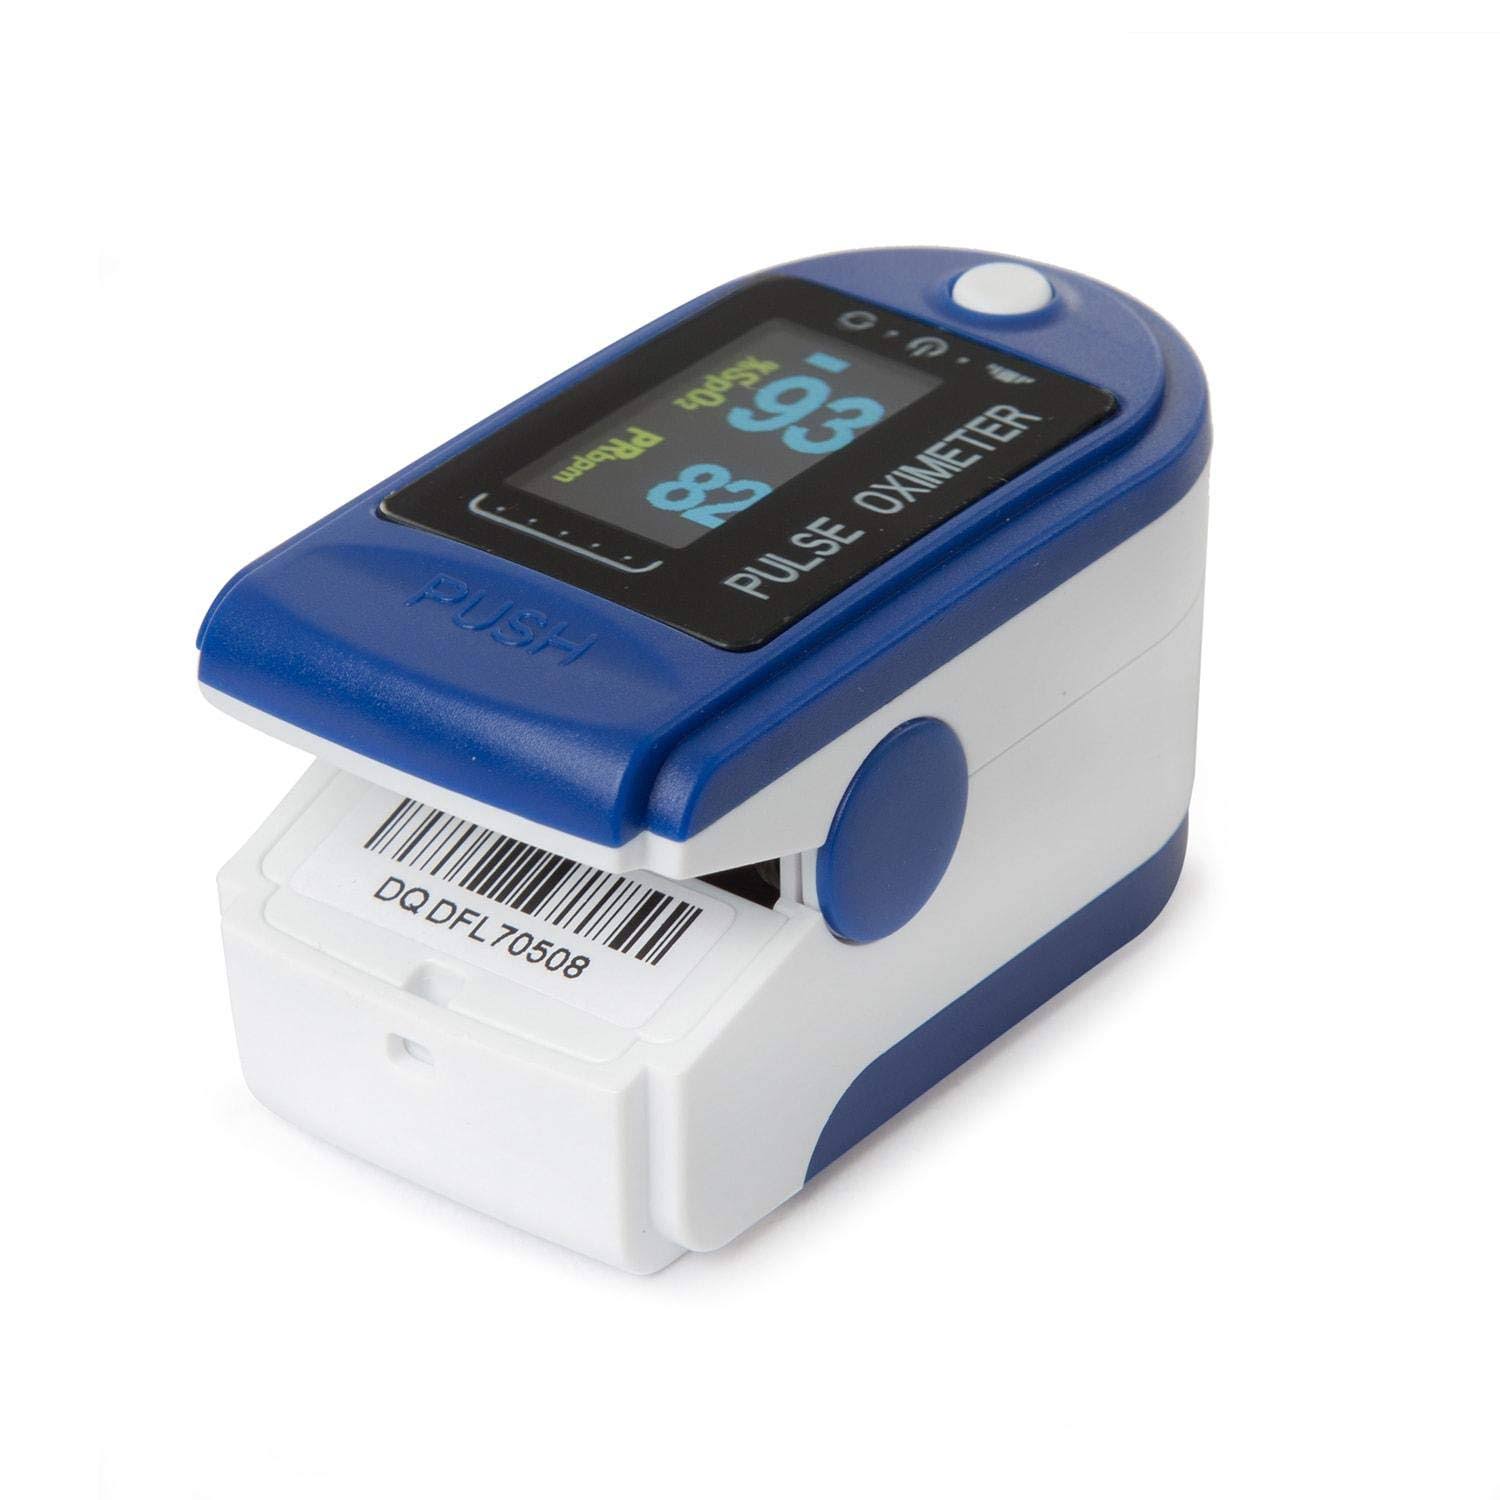 Contec Deluxe Pulse Oximeter Blood Oxygen Level Monitor #CMS-50DA